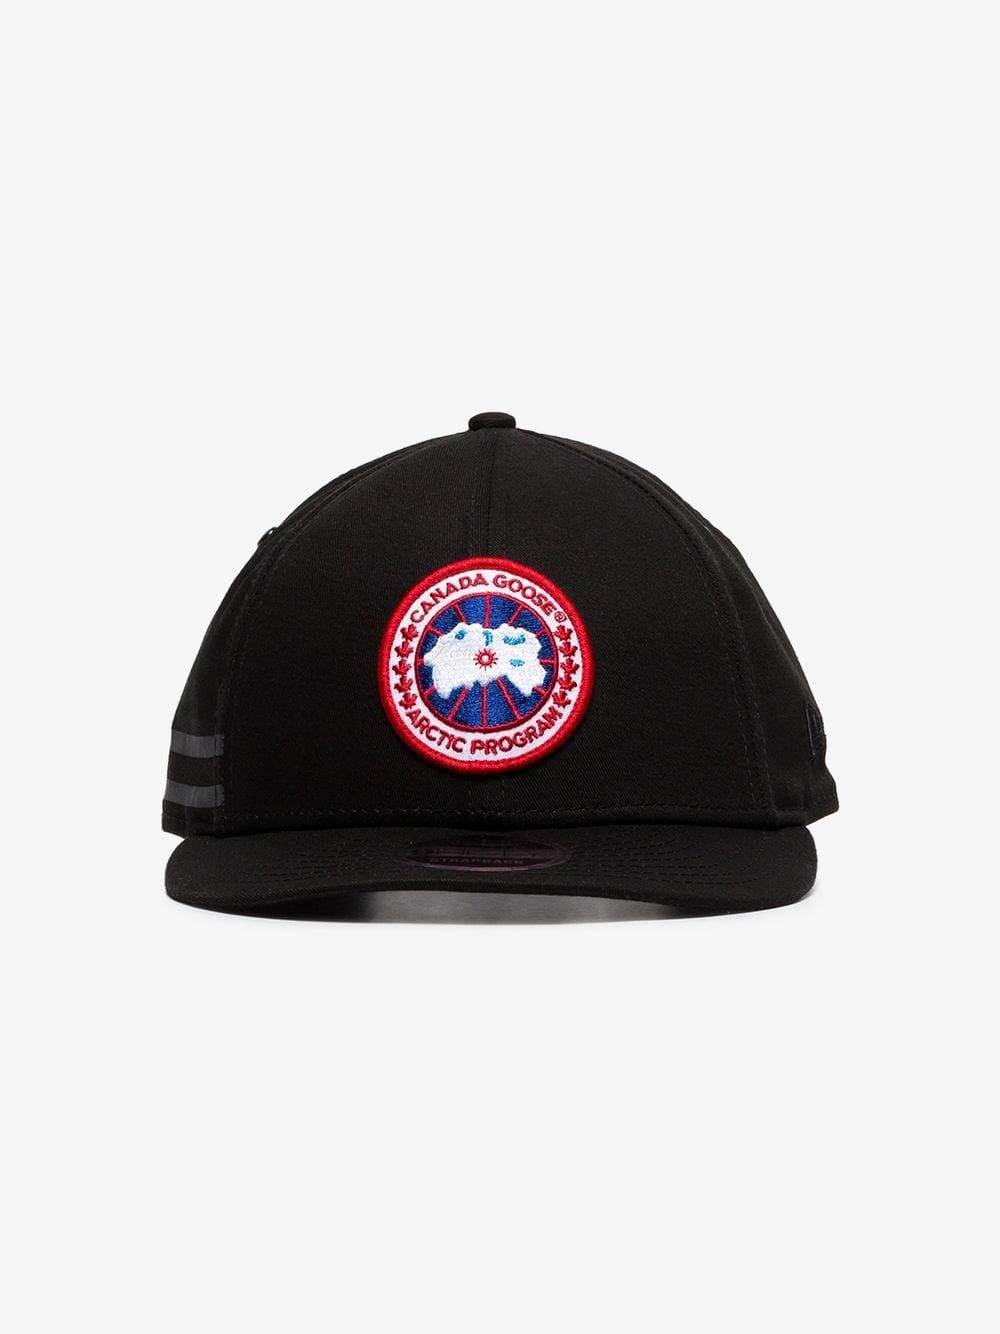 Canada Goose Logo Patch Baseball Cap in Black/Black (Black) for Men - Lyst